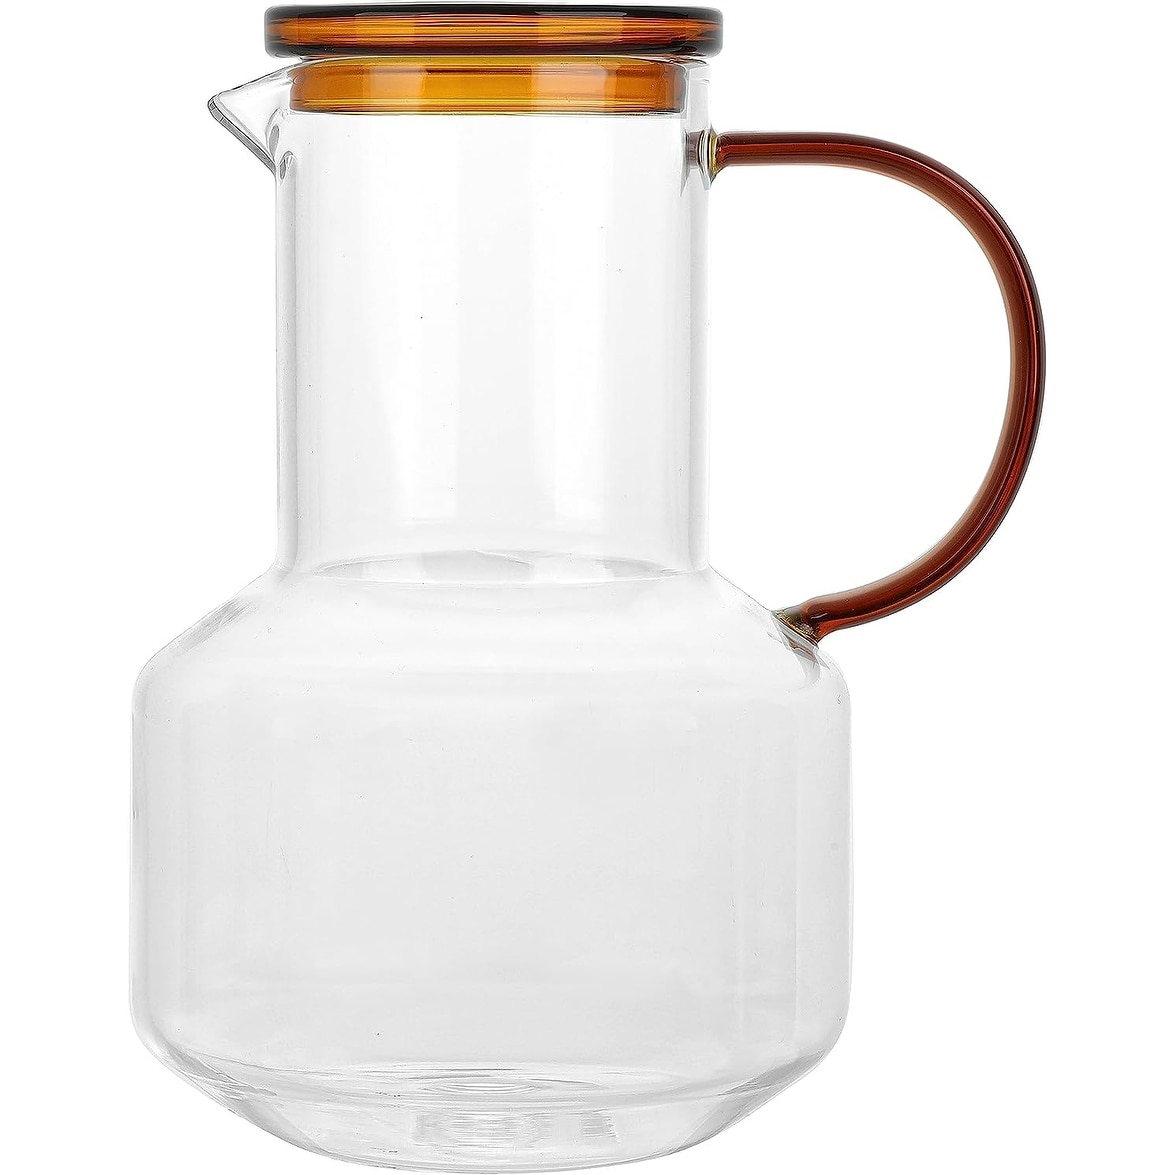 JoyJolt Beverage Serveware Glass Pitcher with Handle & 2 Lids - 60 oz